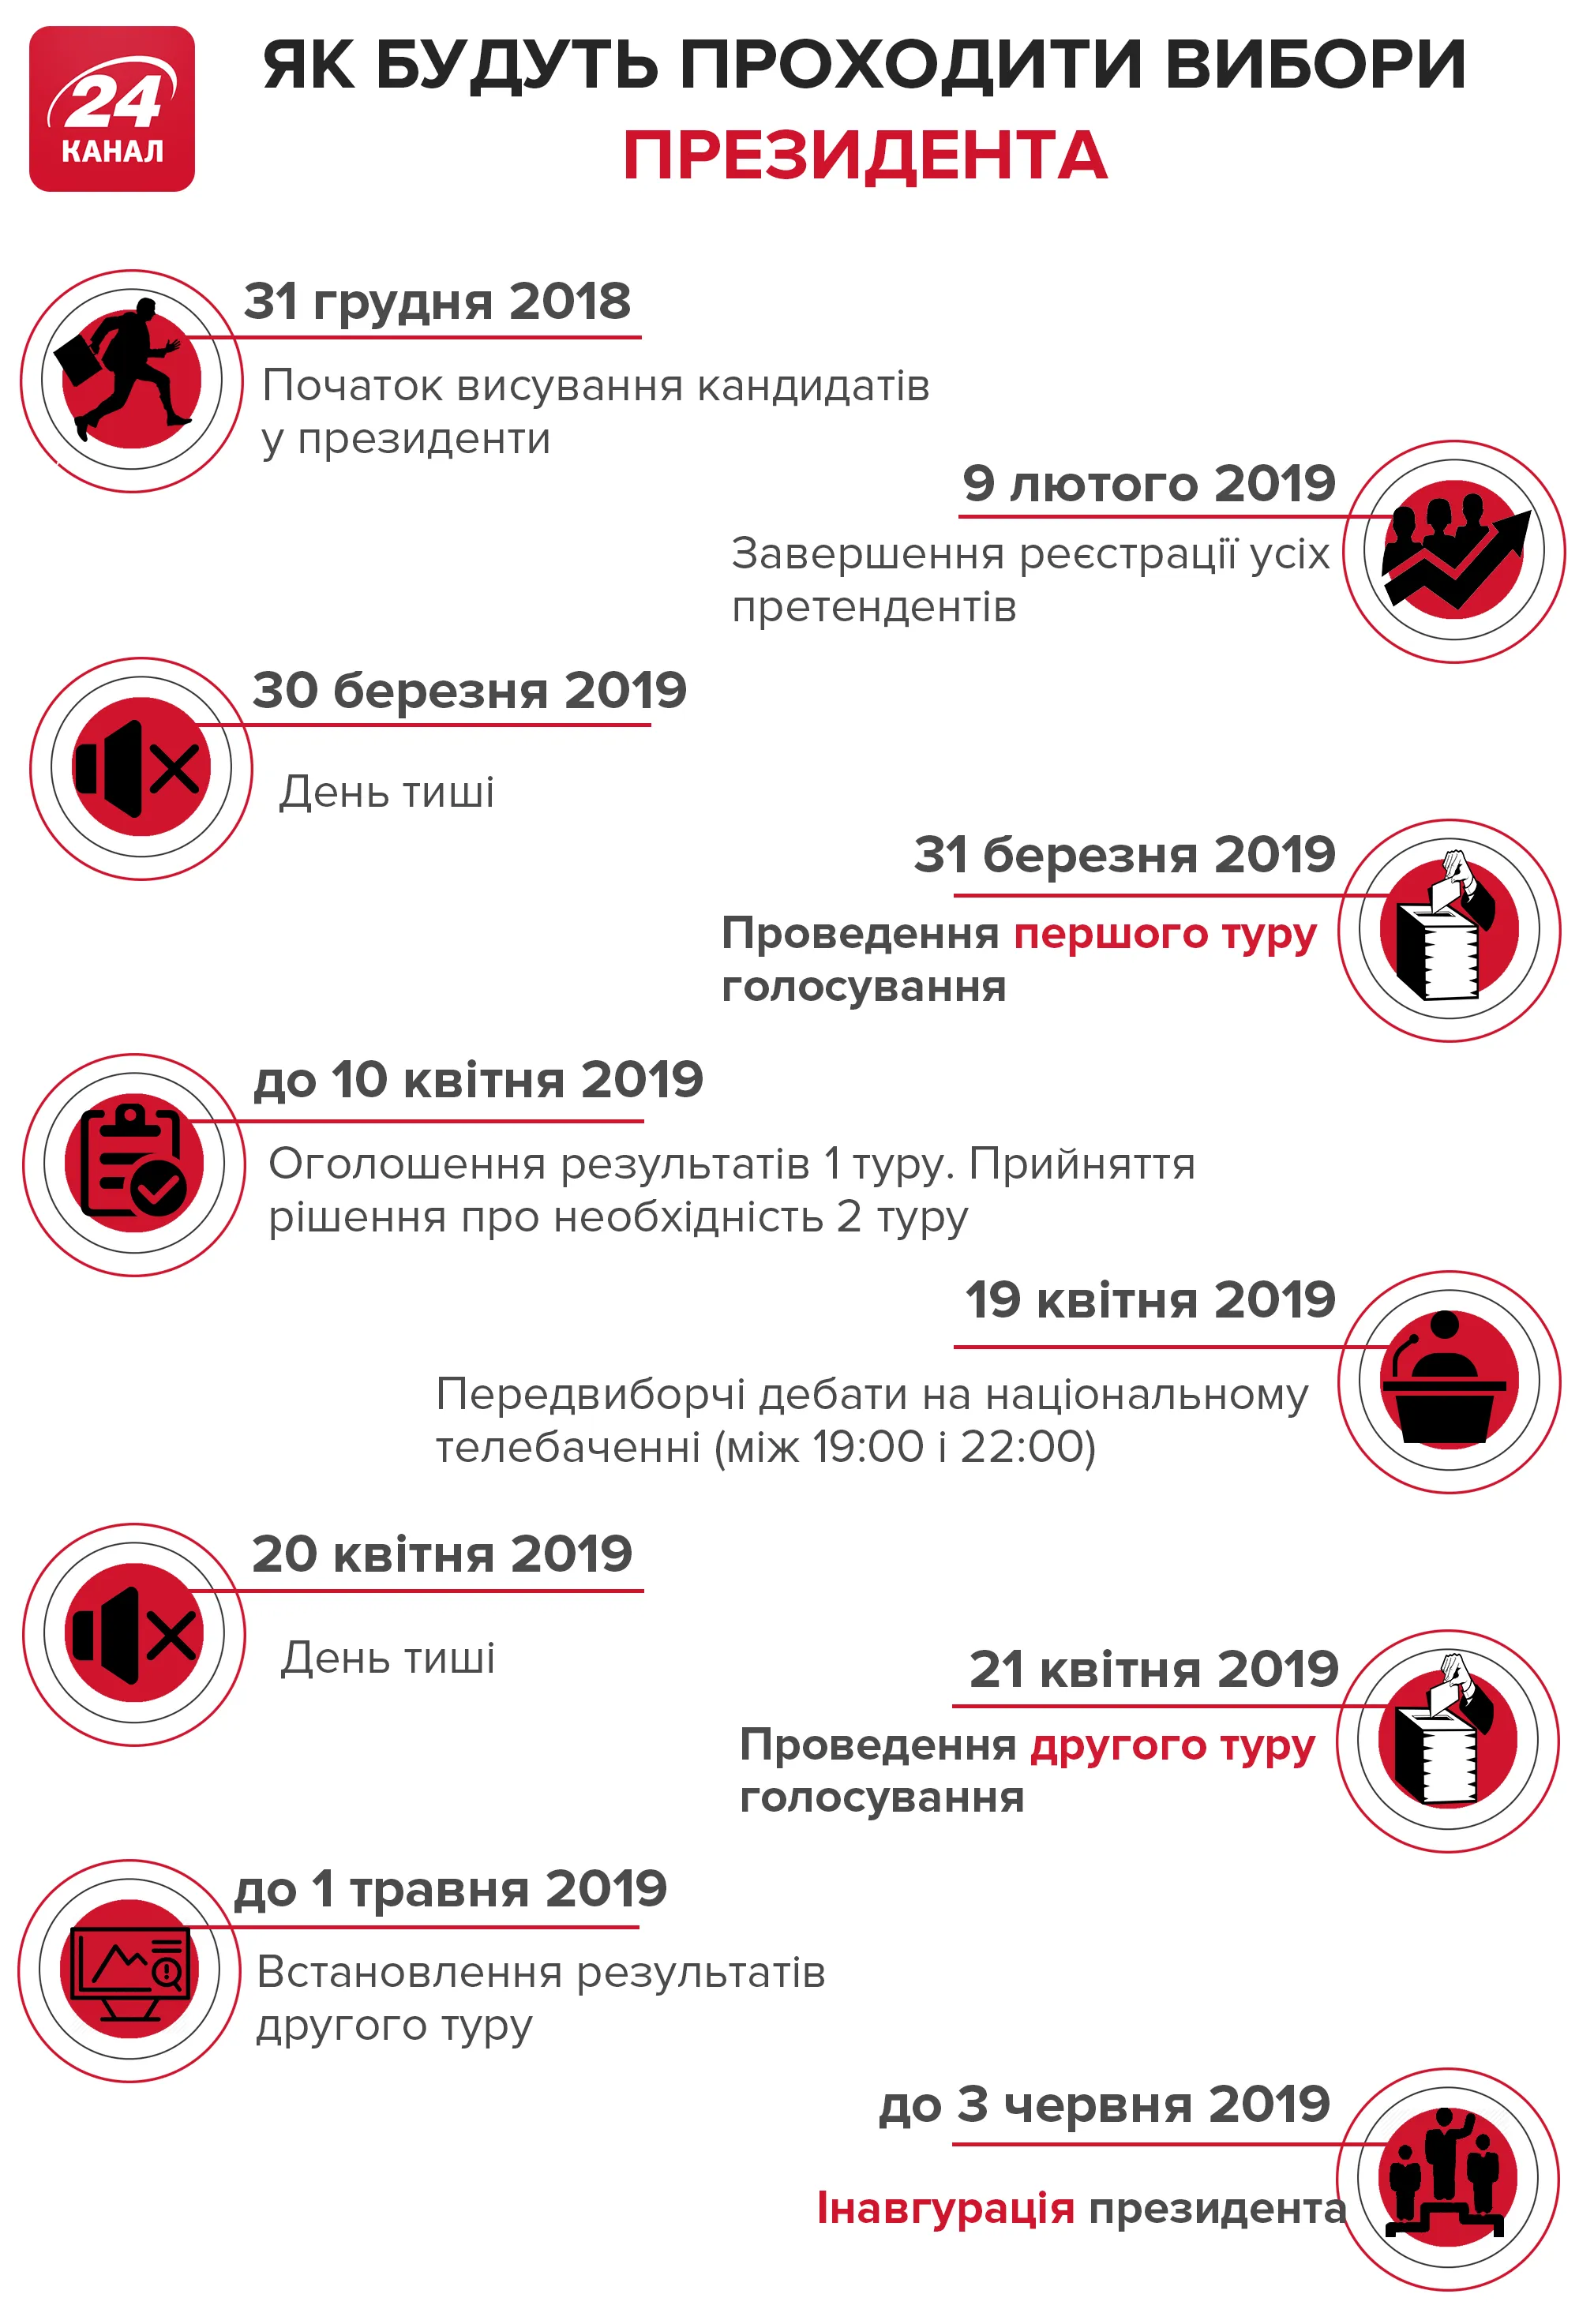 вибори президента україни графік календар дати